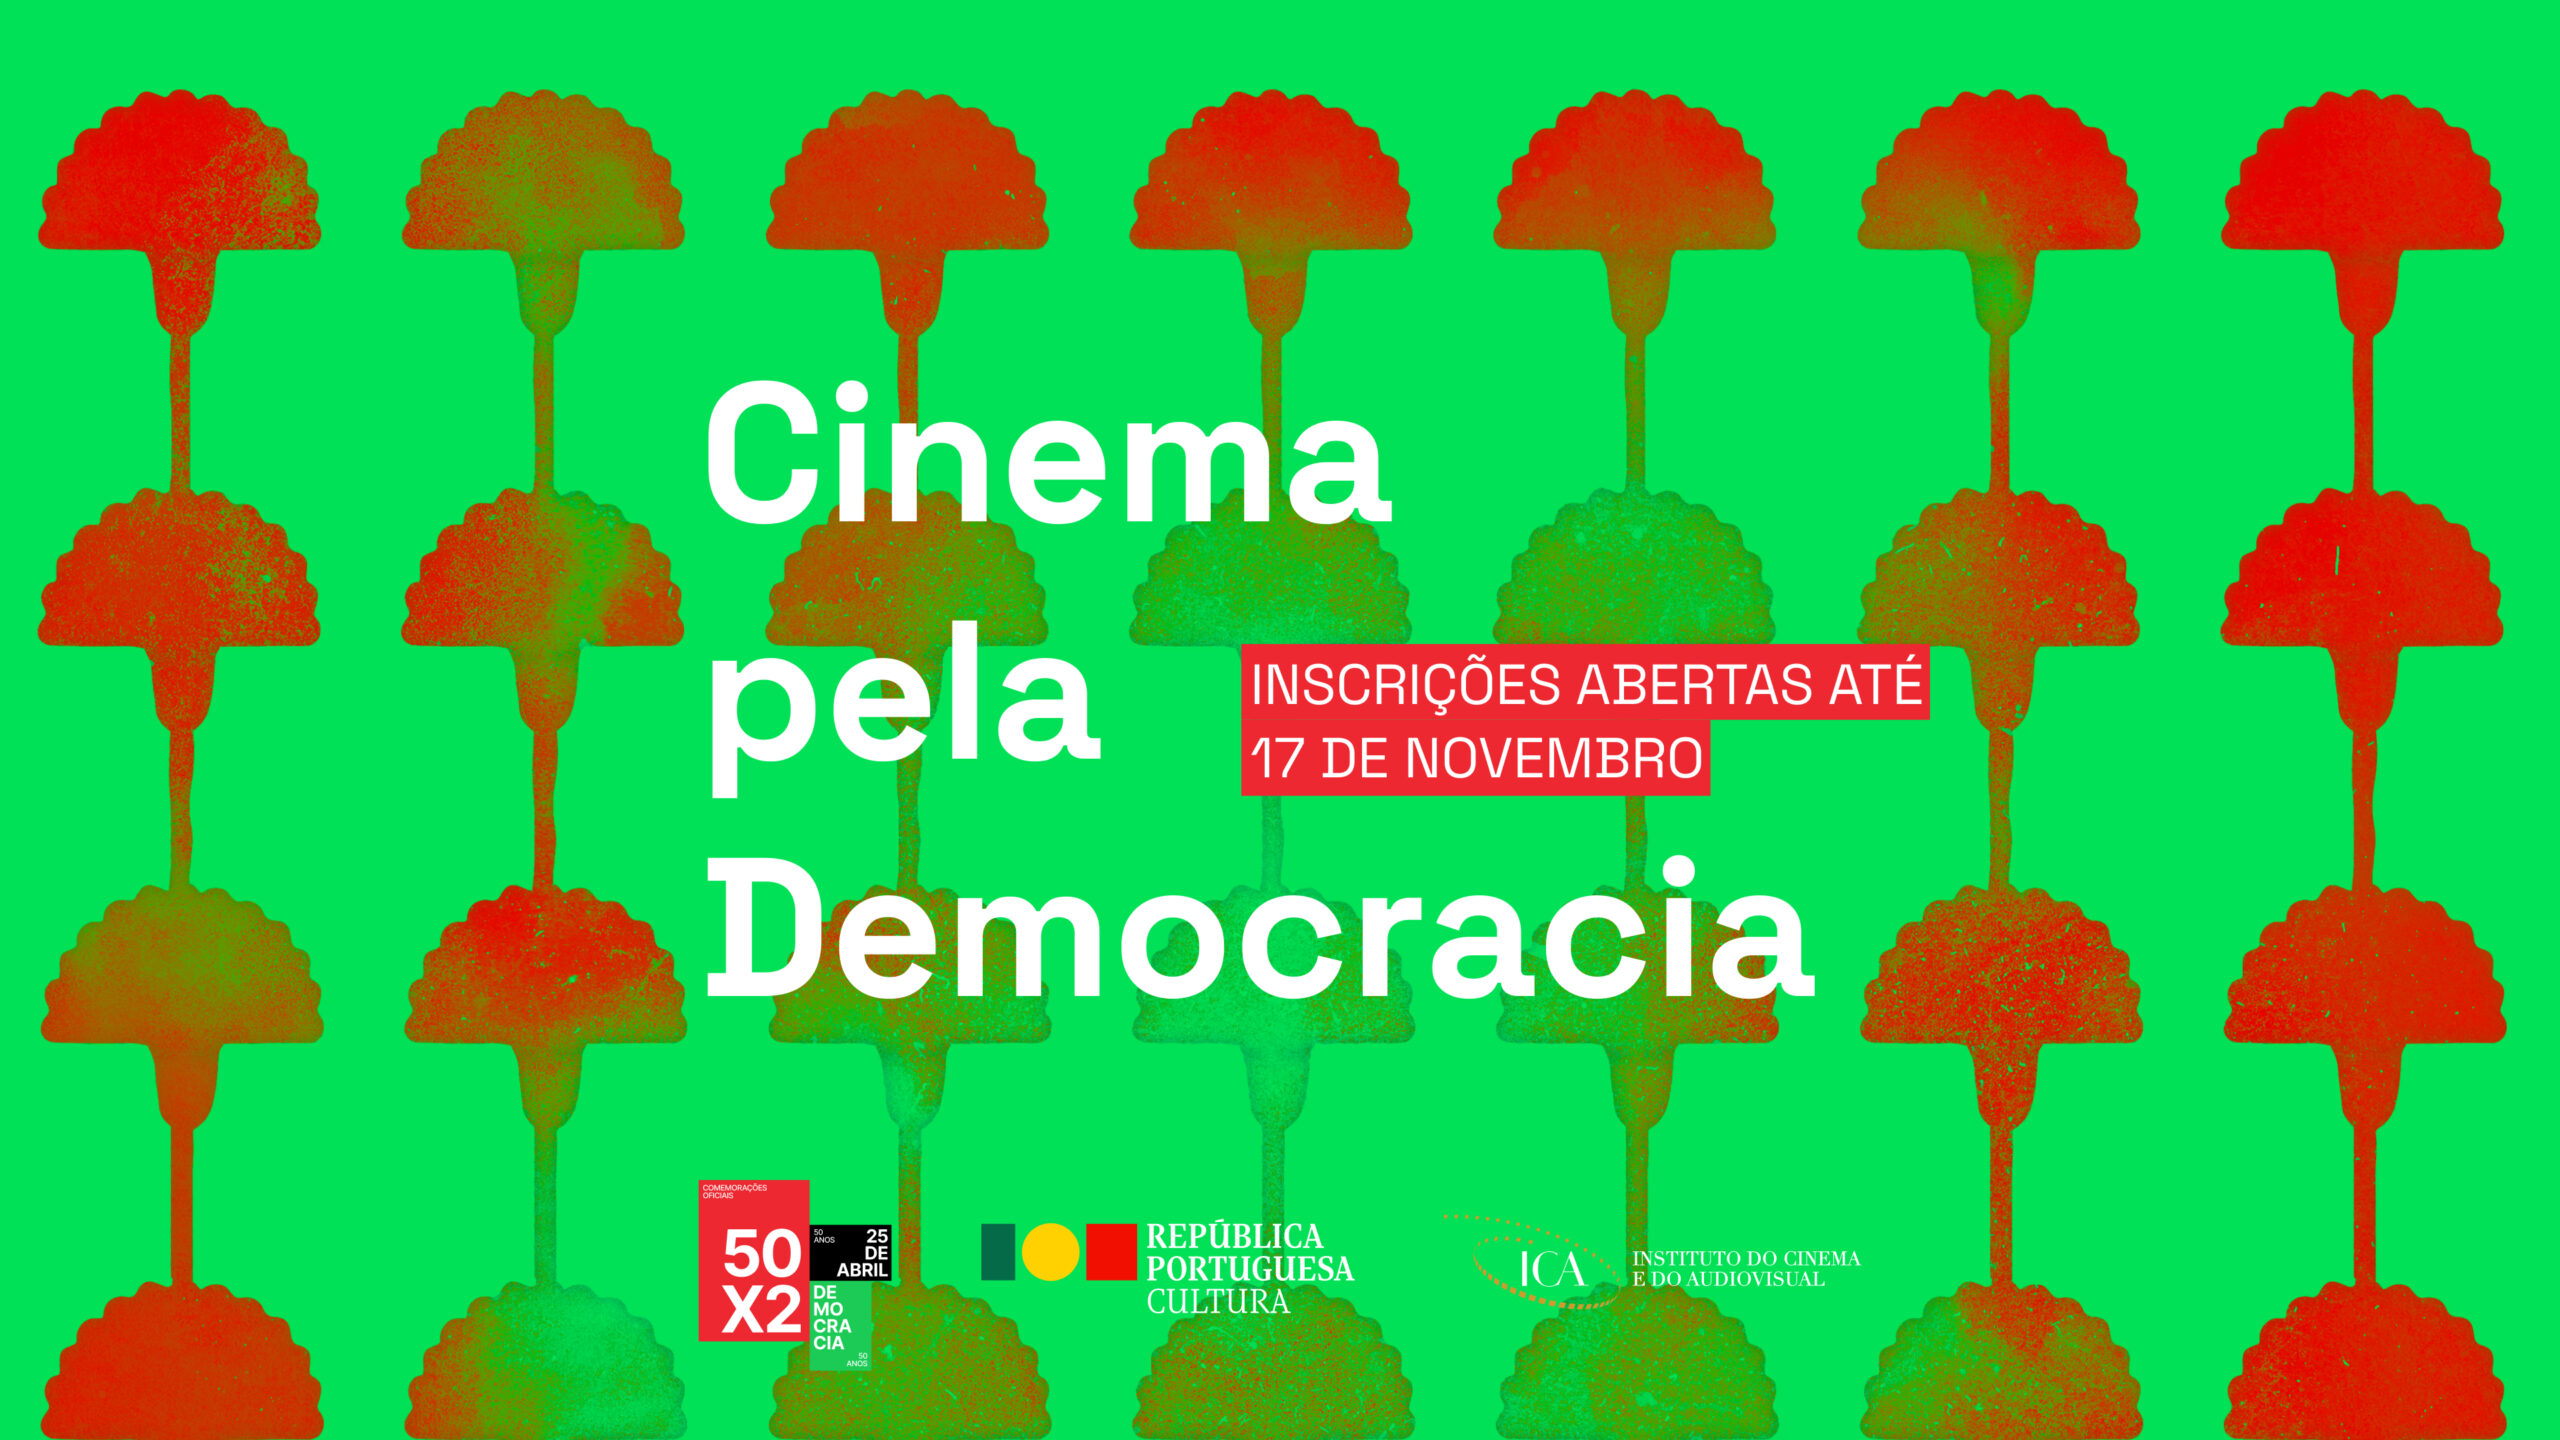 Programa de apoio “Cinema pela Democracia” tem 790 mil euros para distribuir